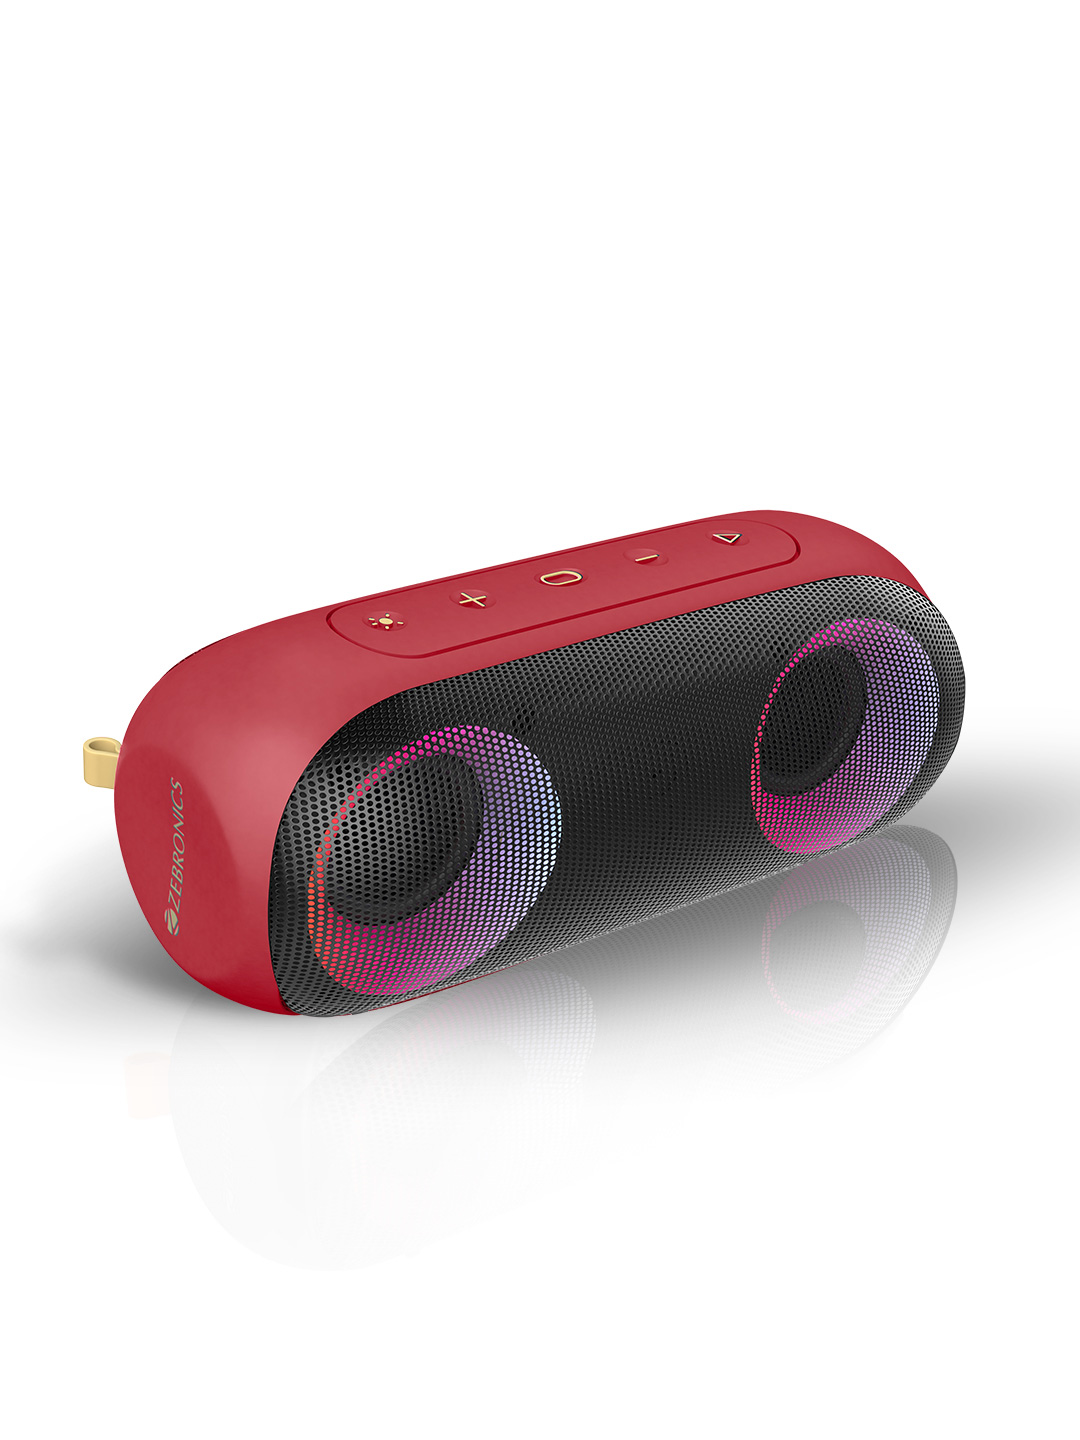 ZEBRONICS Zeb-Music Bomb X Wireless 20W Portable Speaker with IPX7 Waterproof - Red Price in India